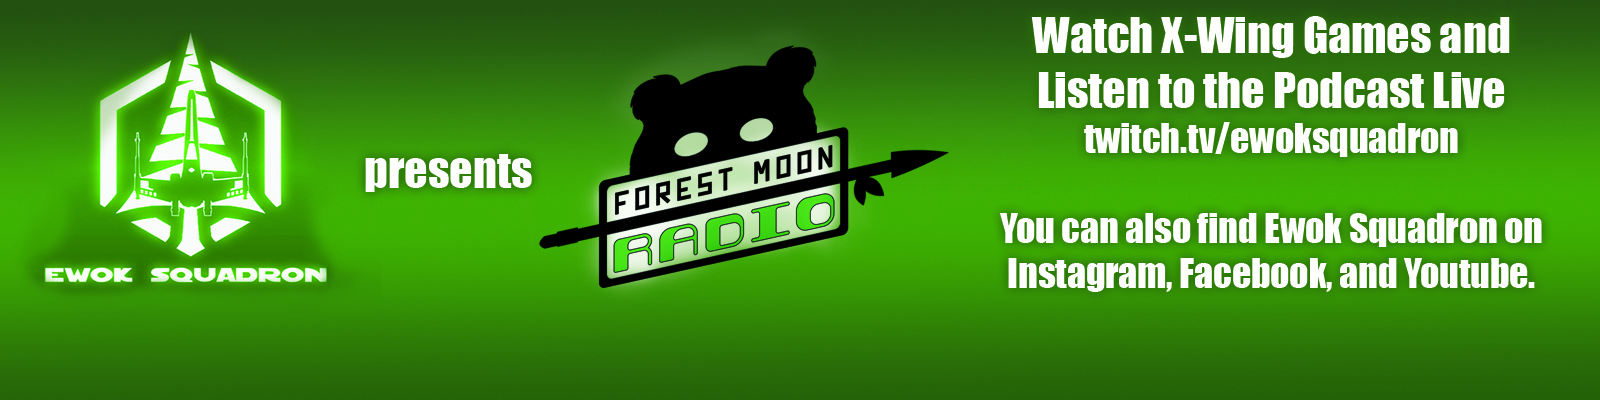 Forest Moon Radio